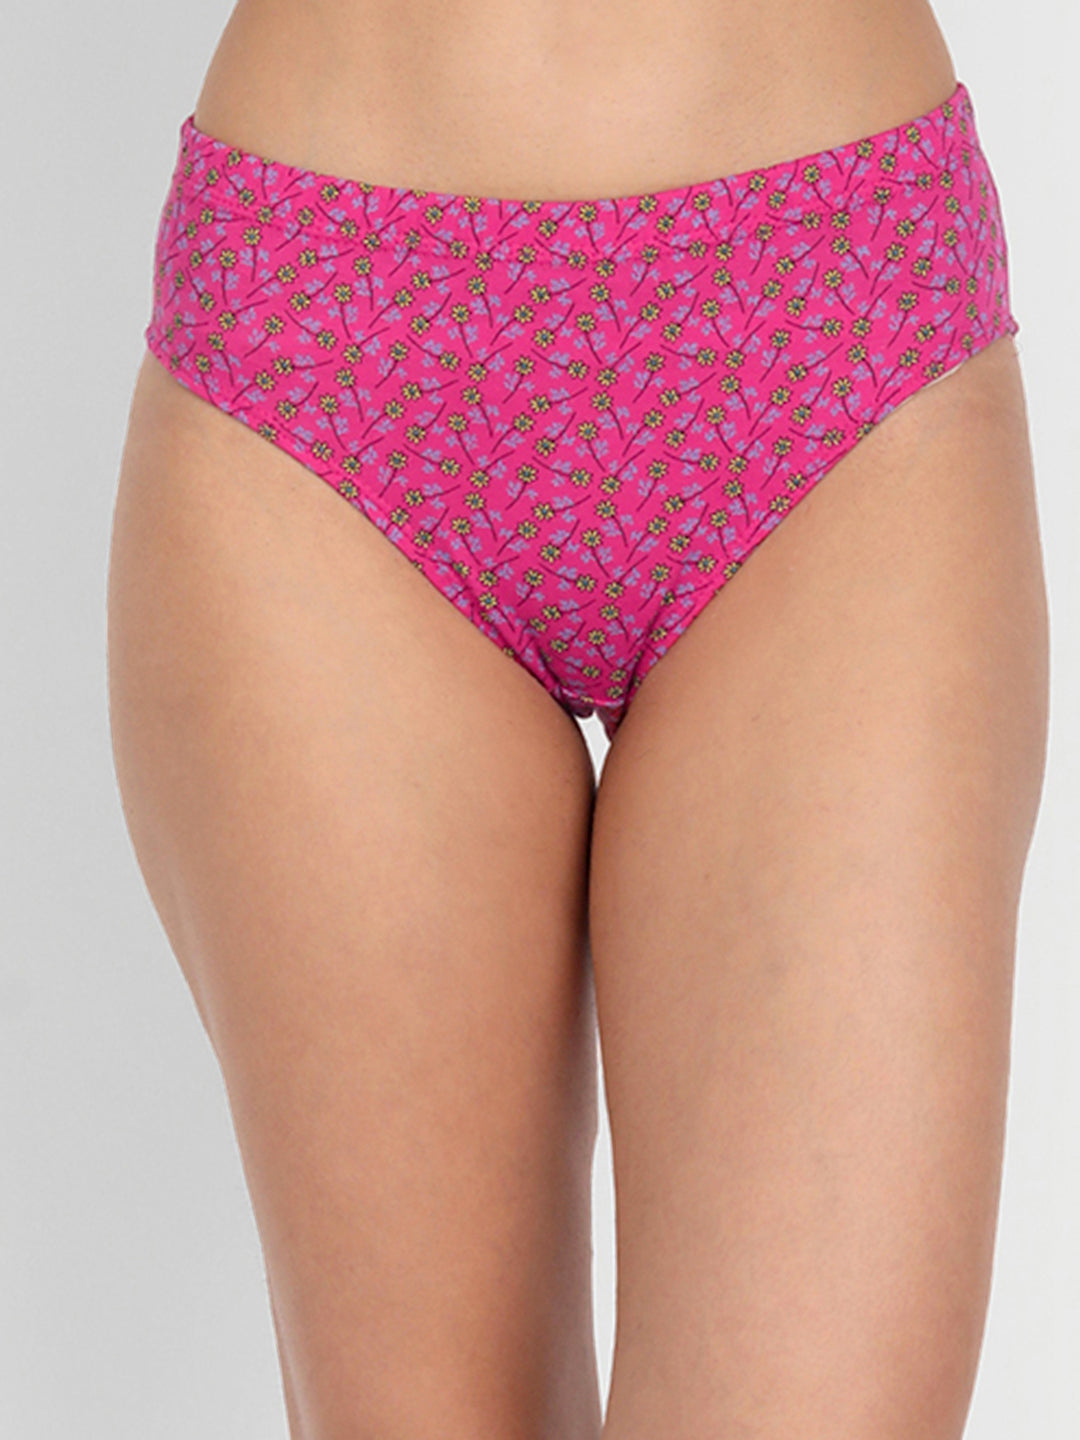 Cotton Stretch Hane s Bikini for Women Underwear 3pcs pack Panty set READ  DESCRIPTION